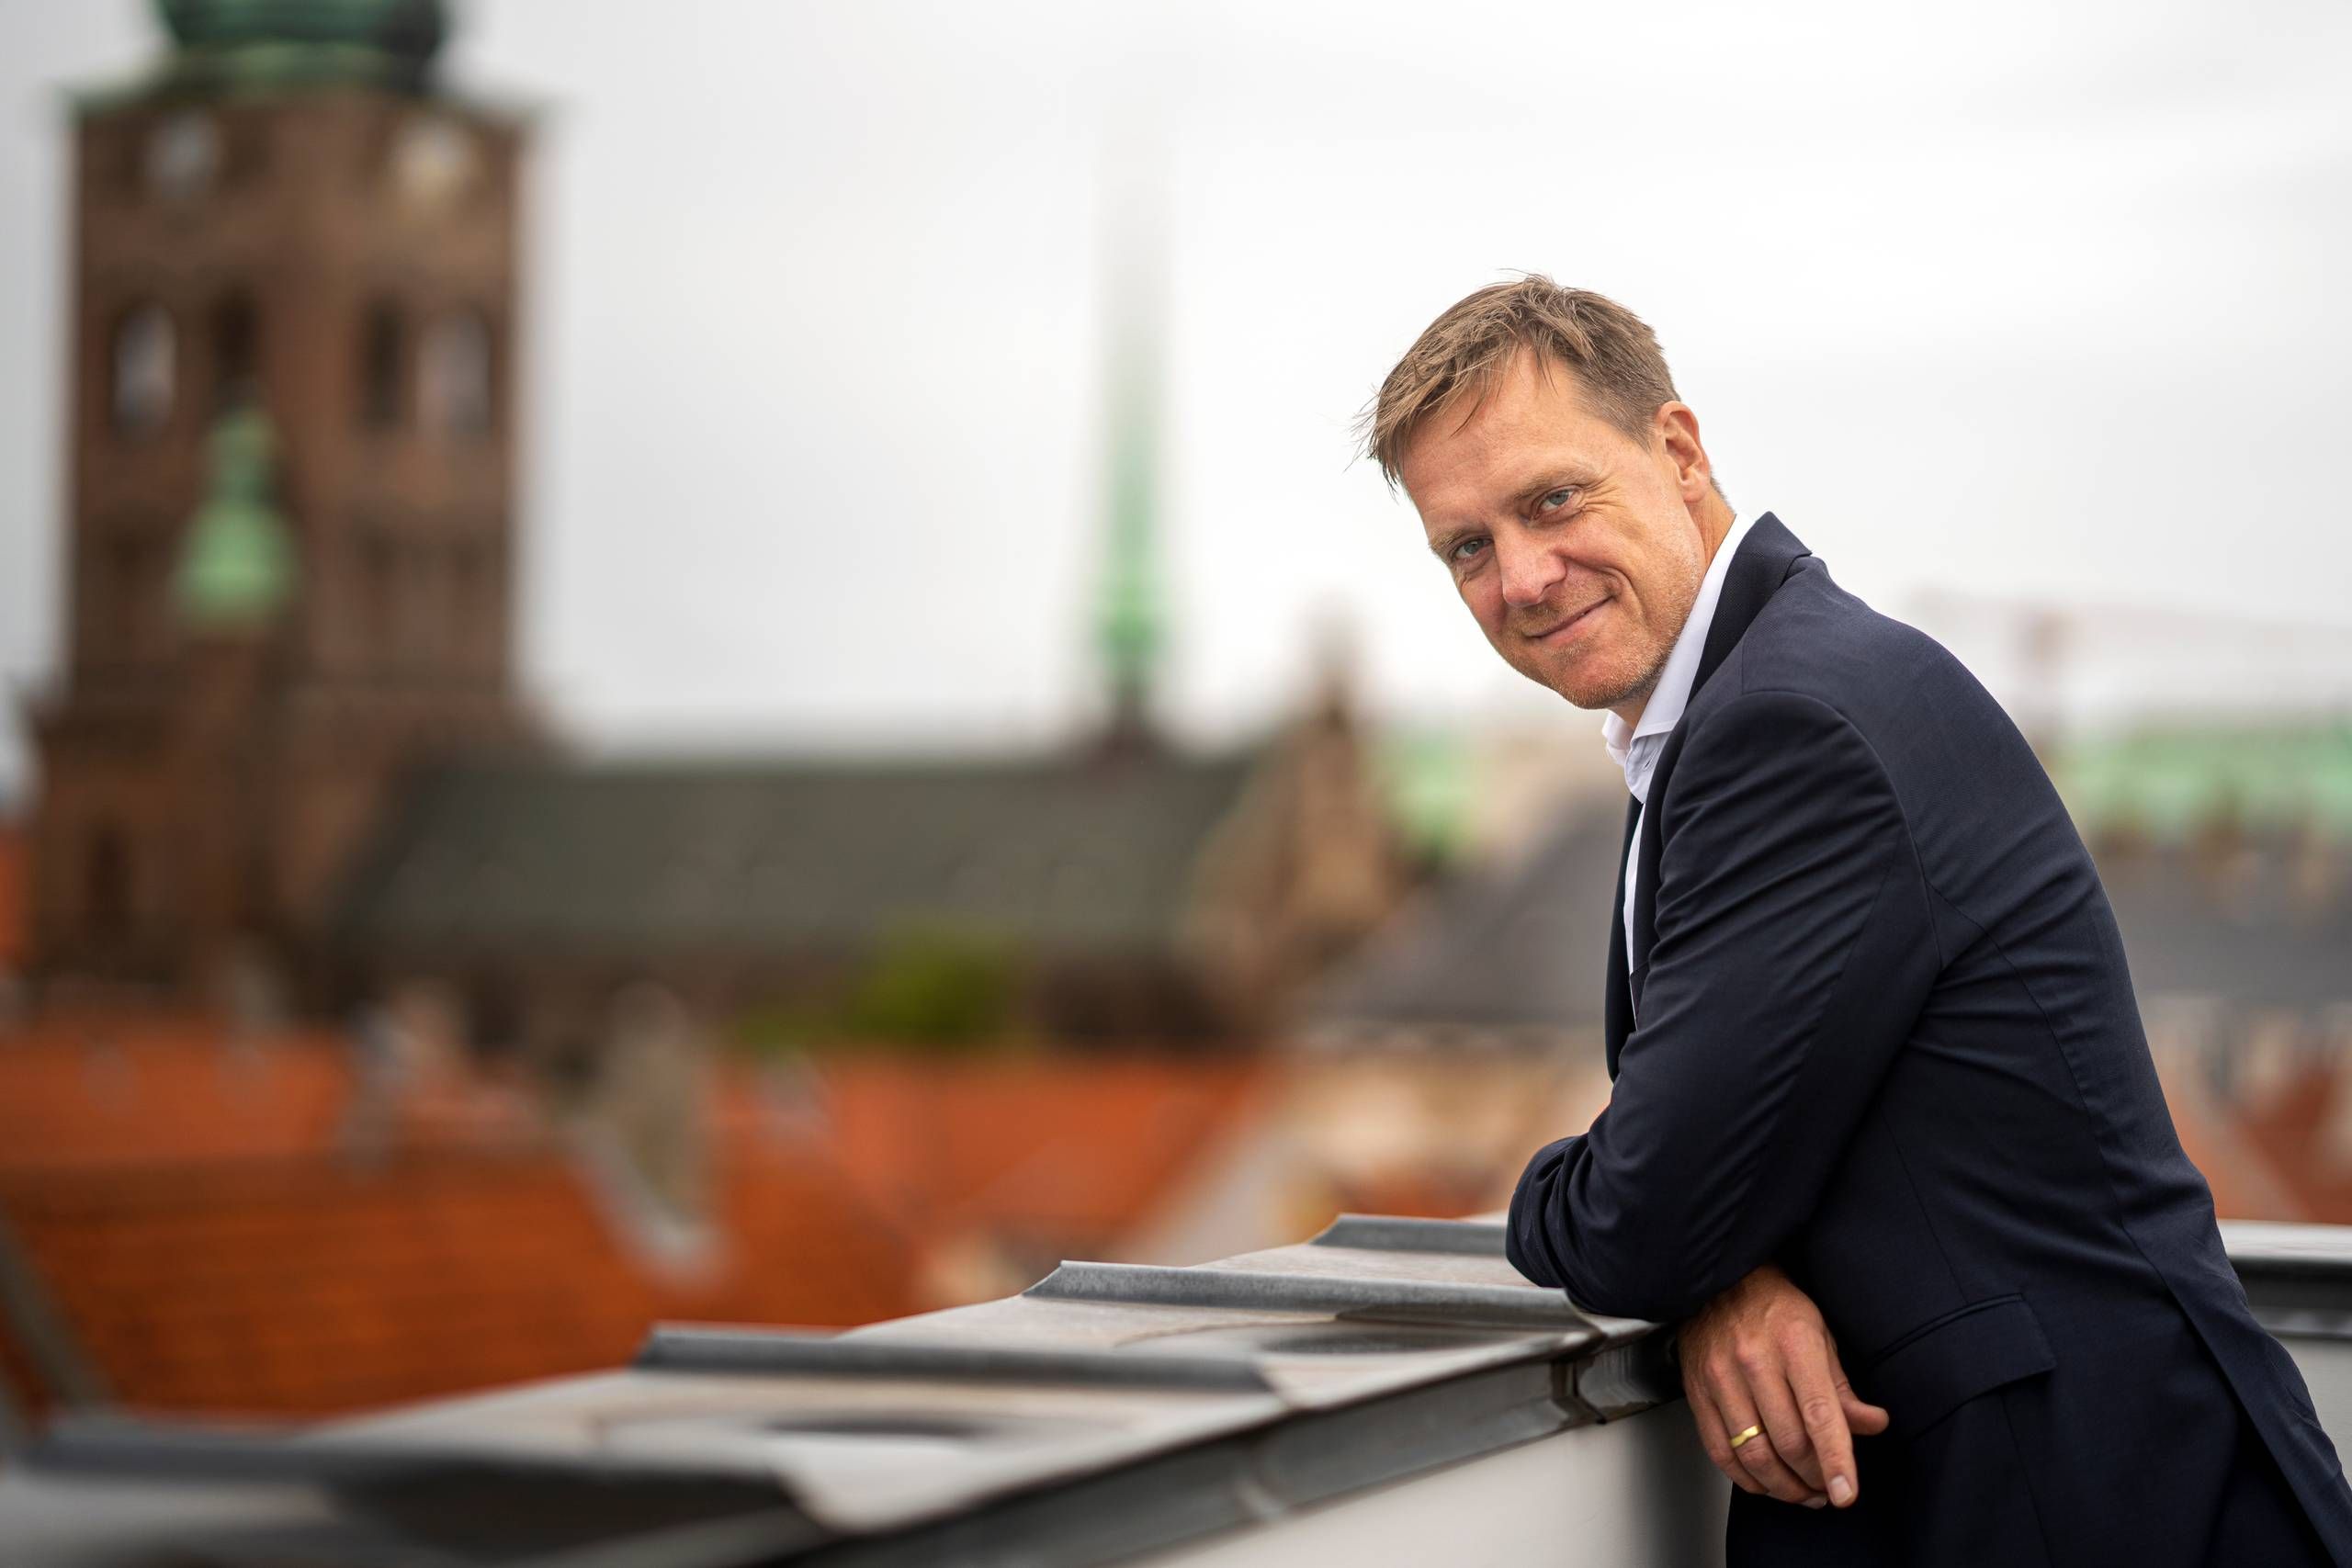 Karsten Breum is the new head of Group HR at Danske Bank